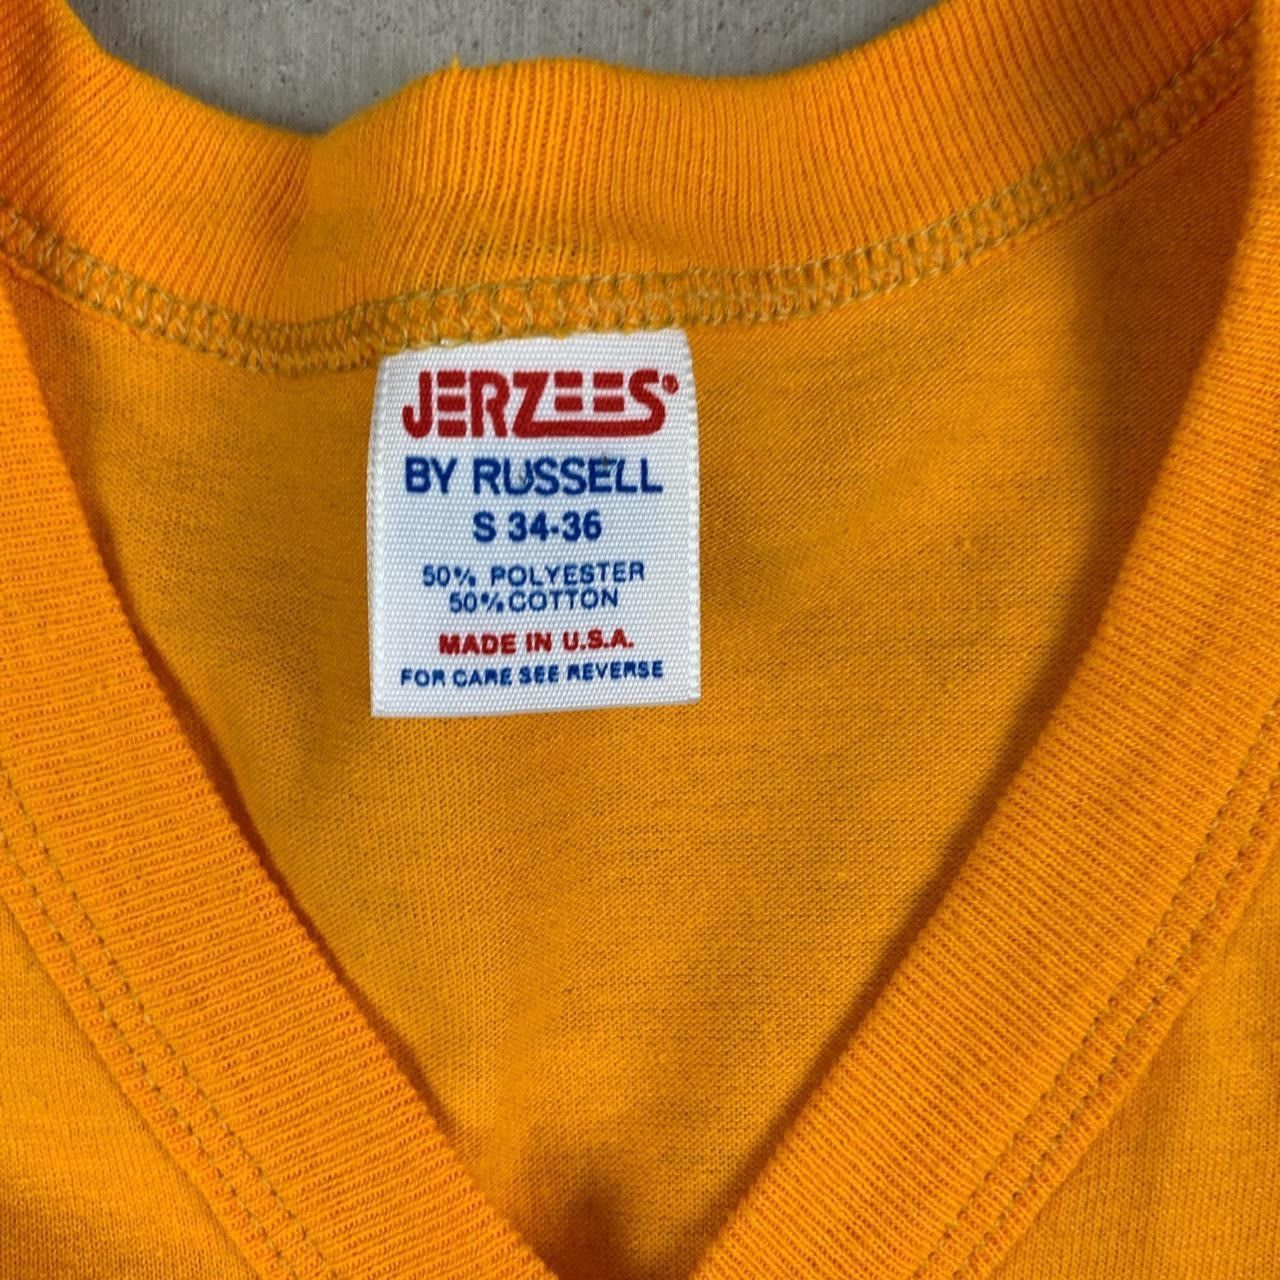 Vintage Vintage 80s Ucla Bruins Bruins Jersey T Shirt Size US S / EU 44-46 / 1 - 4 Preview